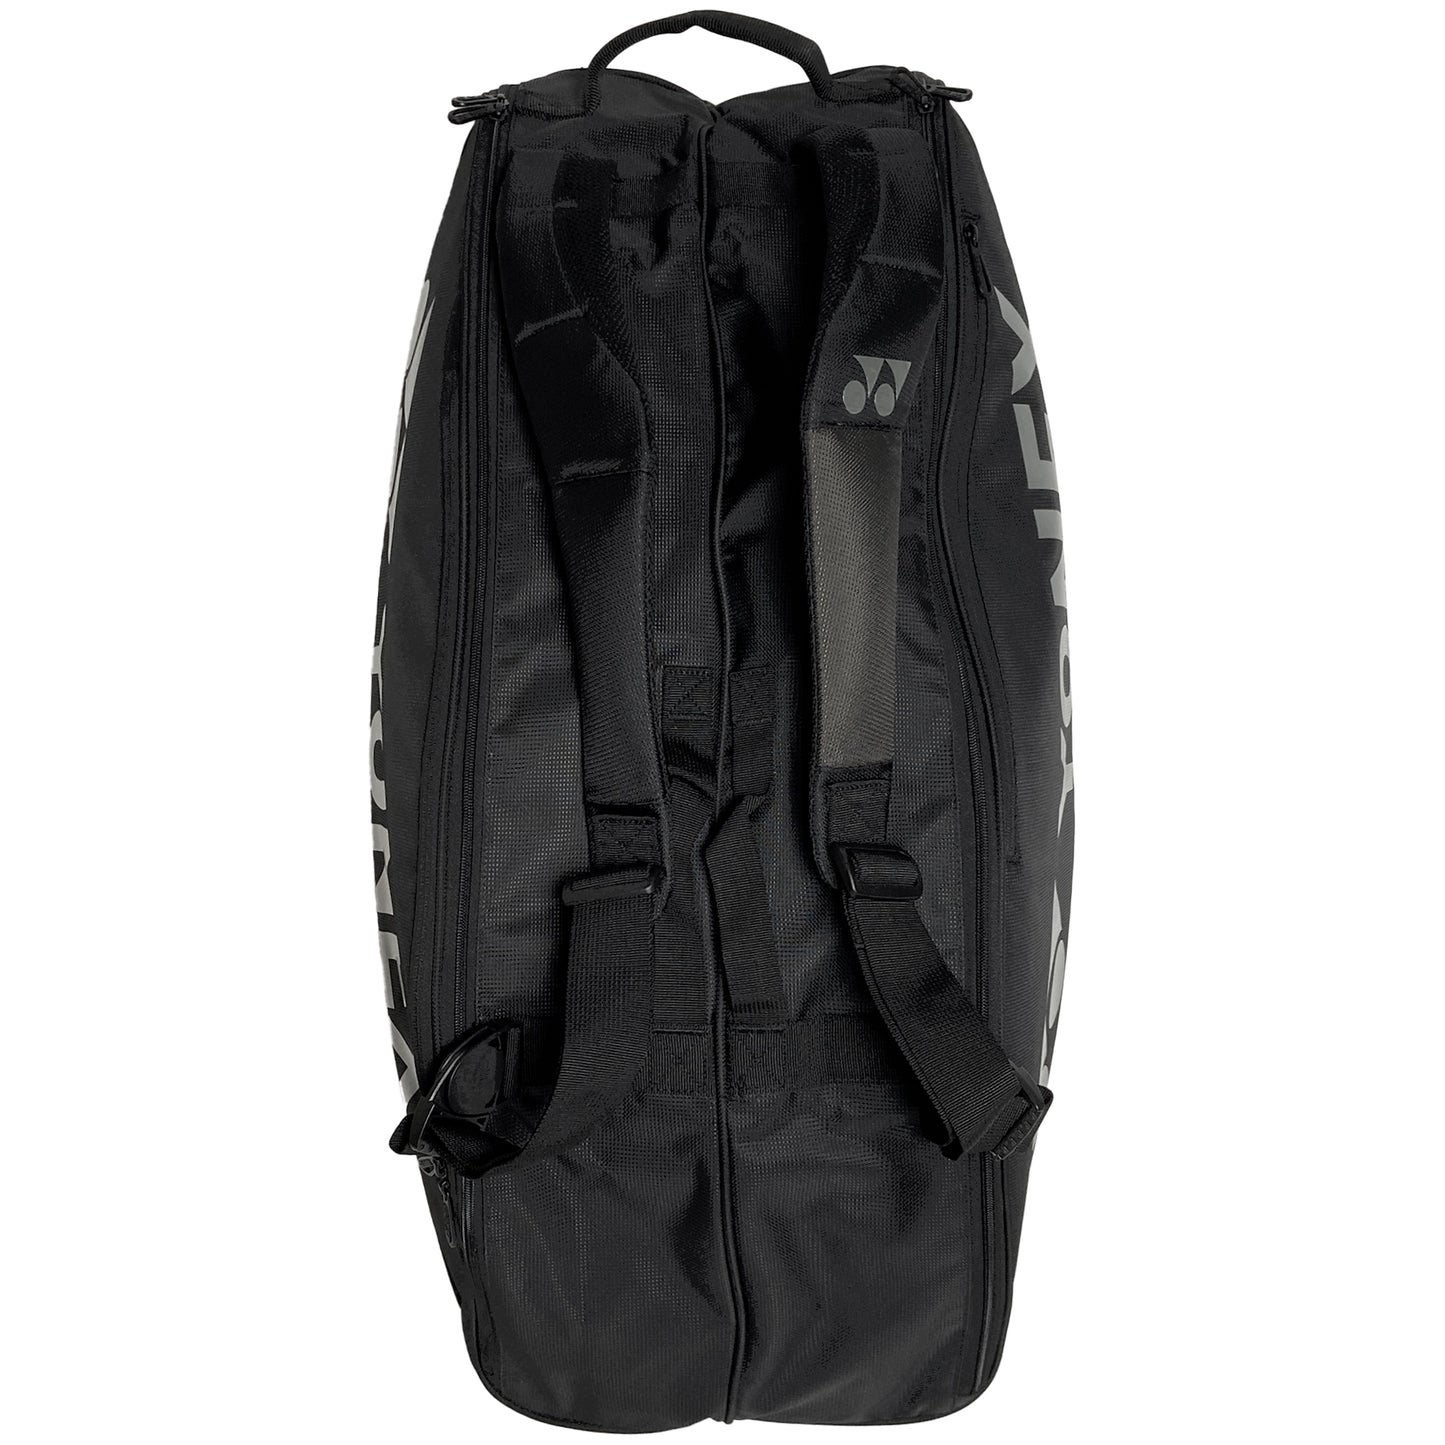 Yonex Pro Racquet Bag 6R (BAG92426) Black